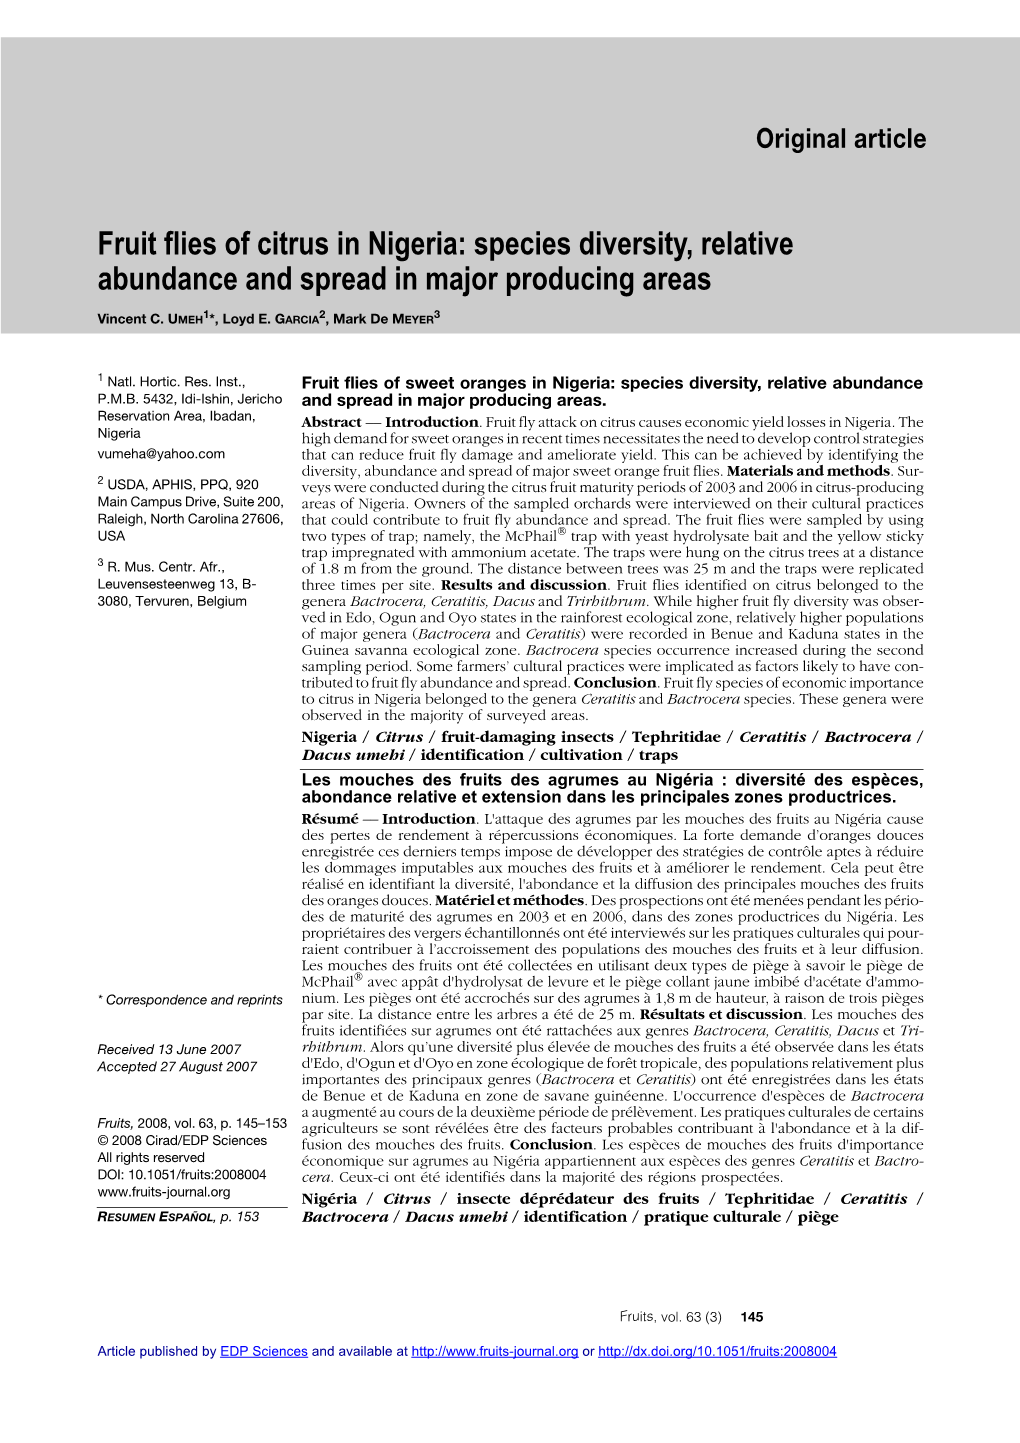 Fruit Flies of Citrus in Nigeria: Species Diversity, Relative Abundance and Spread in Major Producing Areas